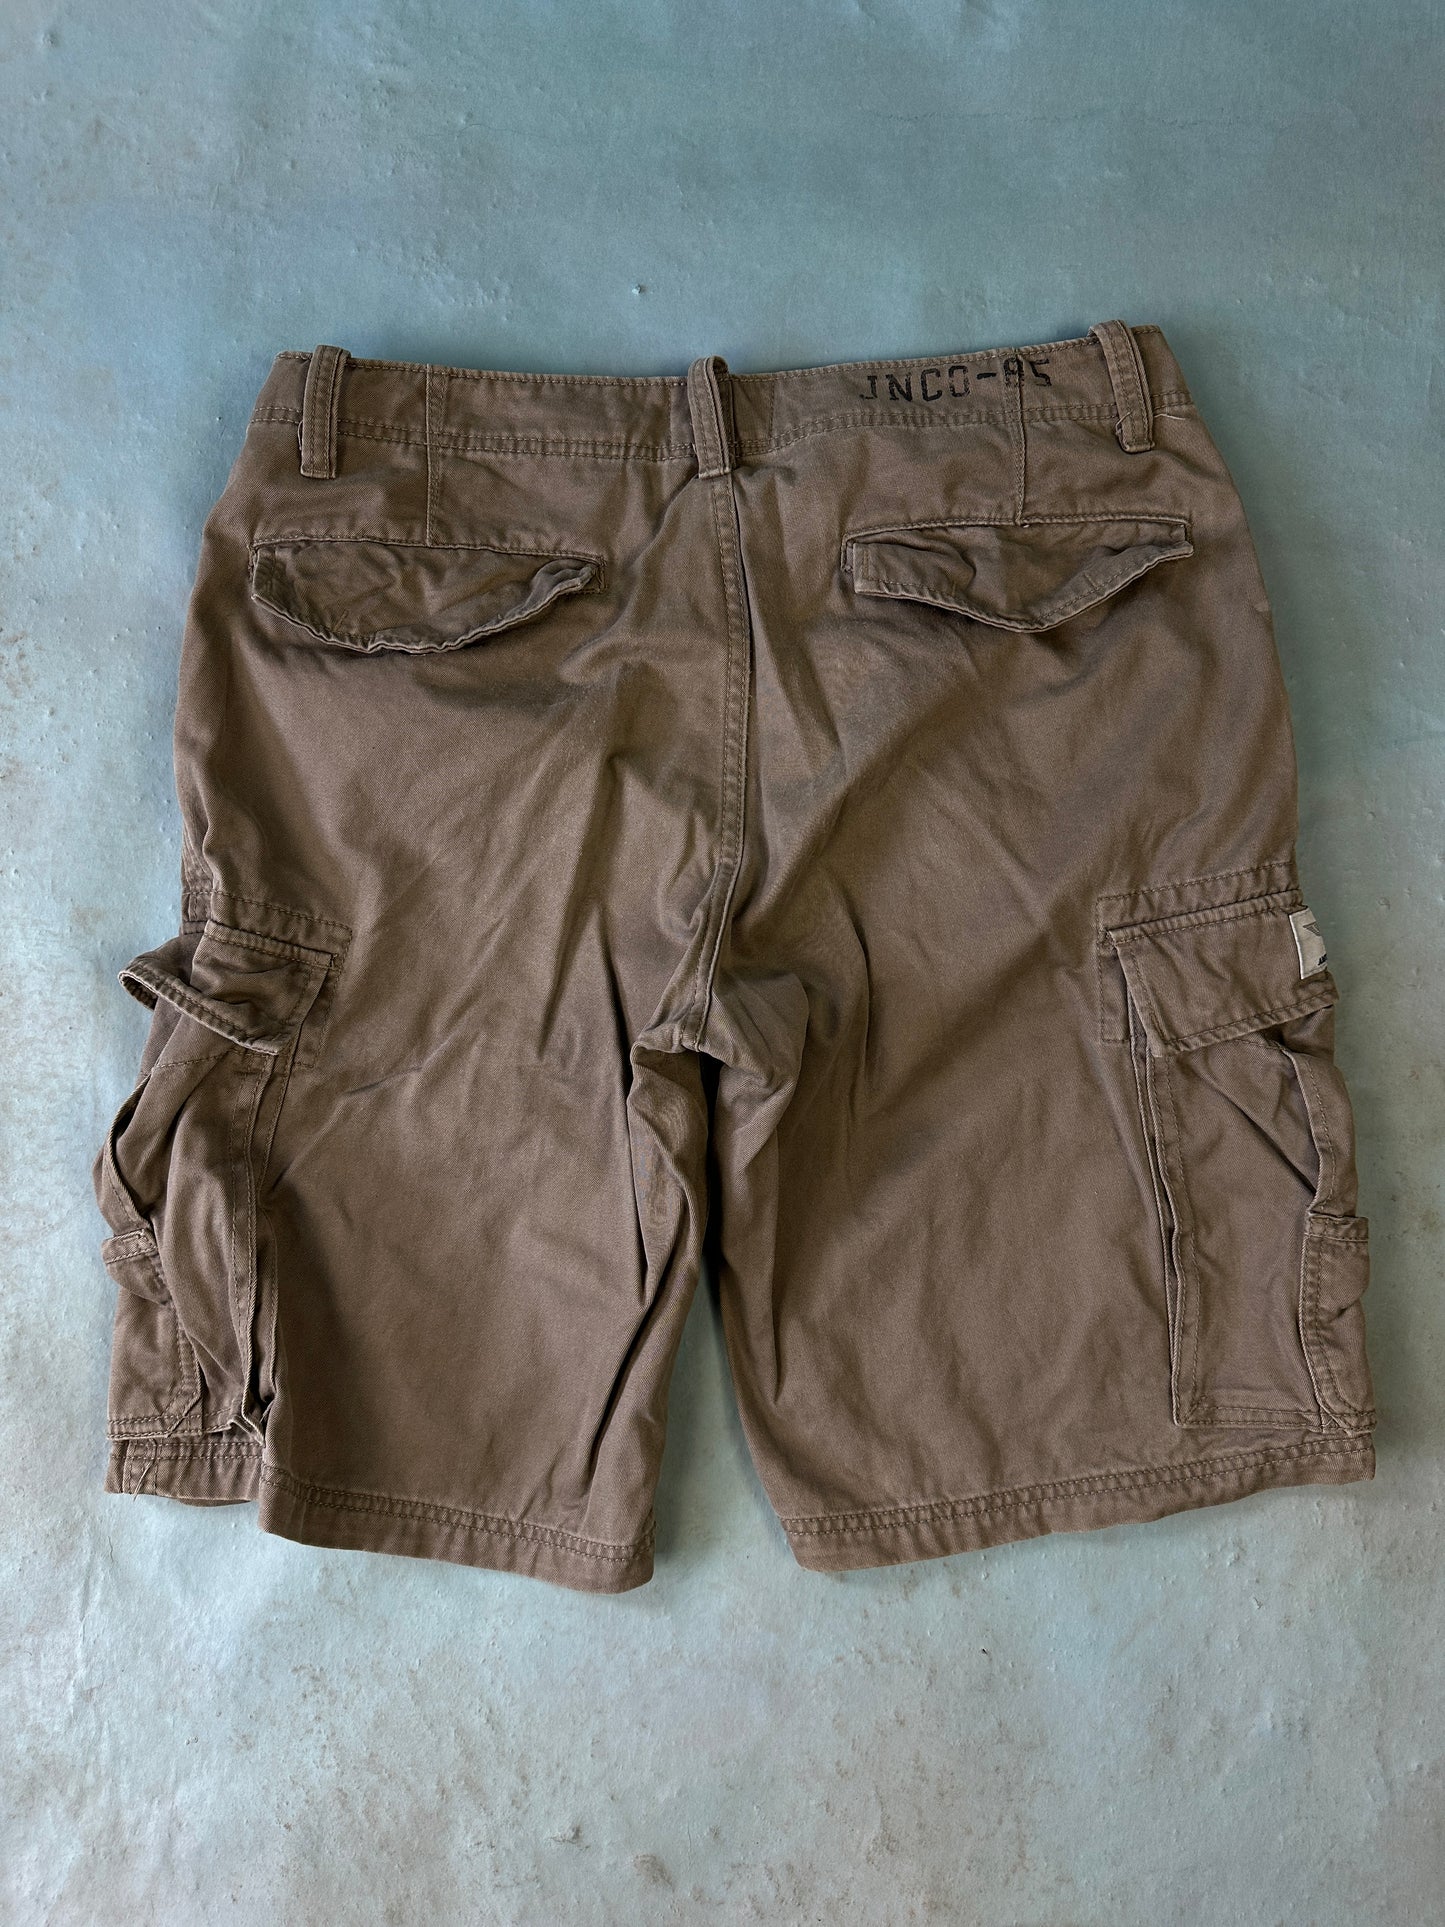 JNCO Cargo Vintage Shorts - 36